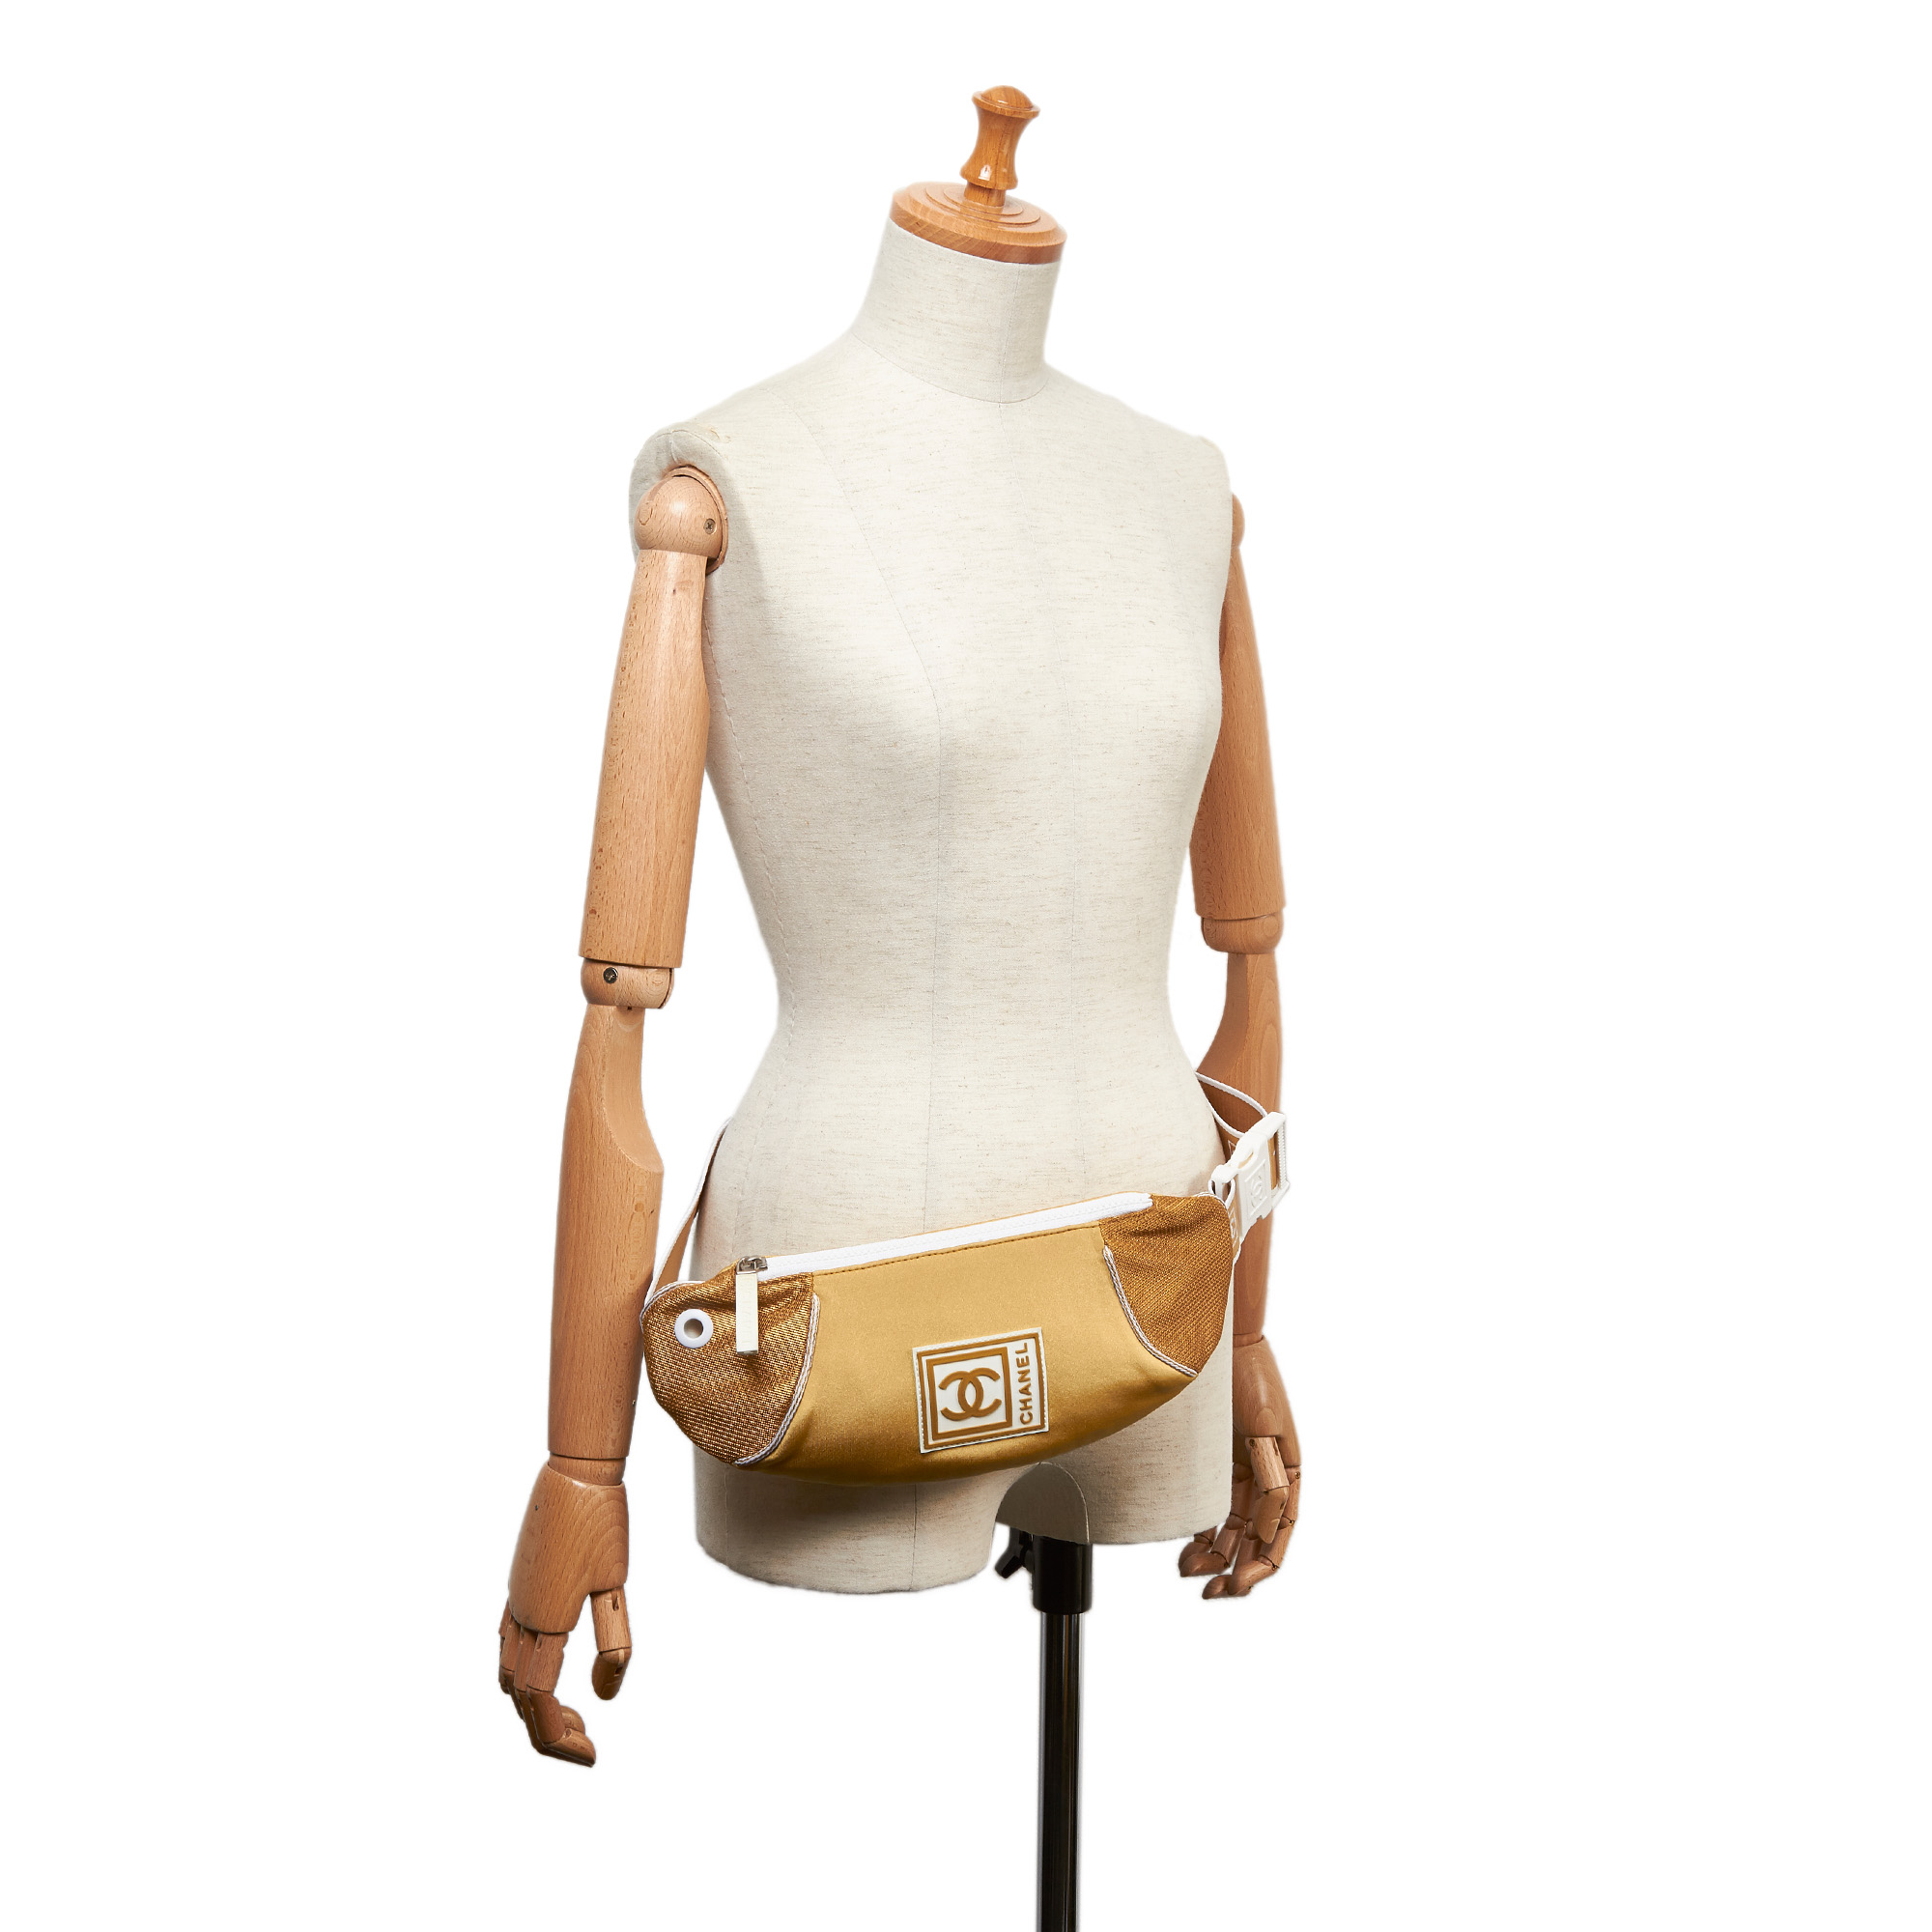 Pre-Loved Chanel Gold Nylon Fabric CC Sports Line Belt Bag Italy | eBay